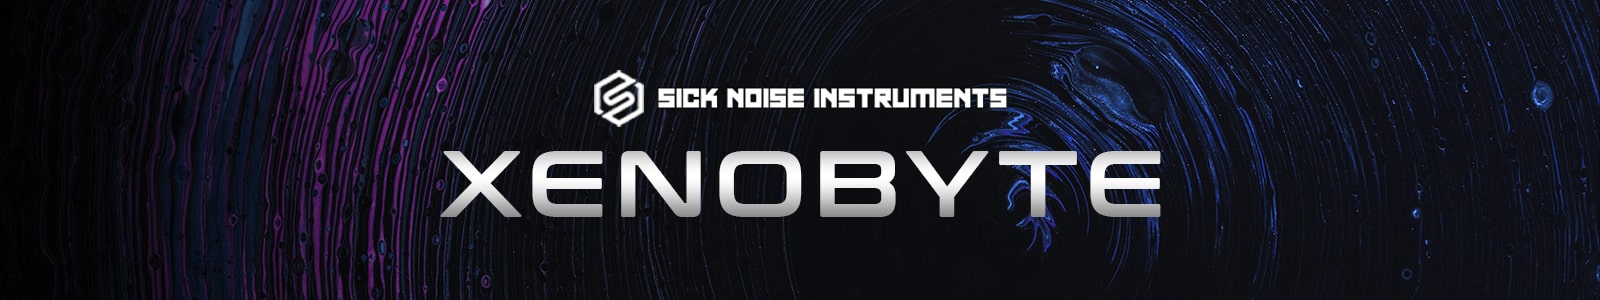 Xenobyte by Sick Noise Instruments